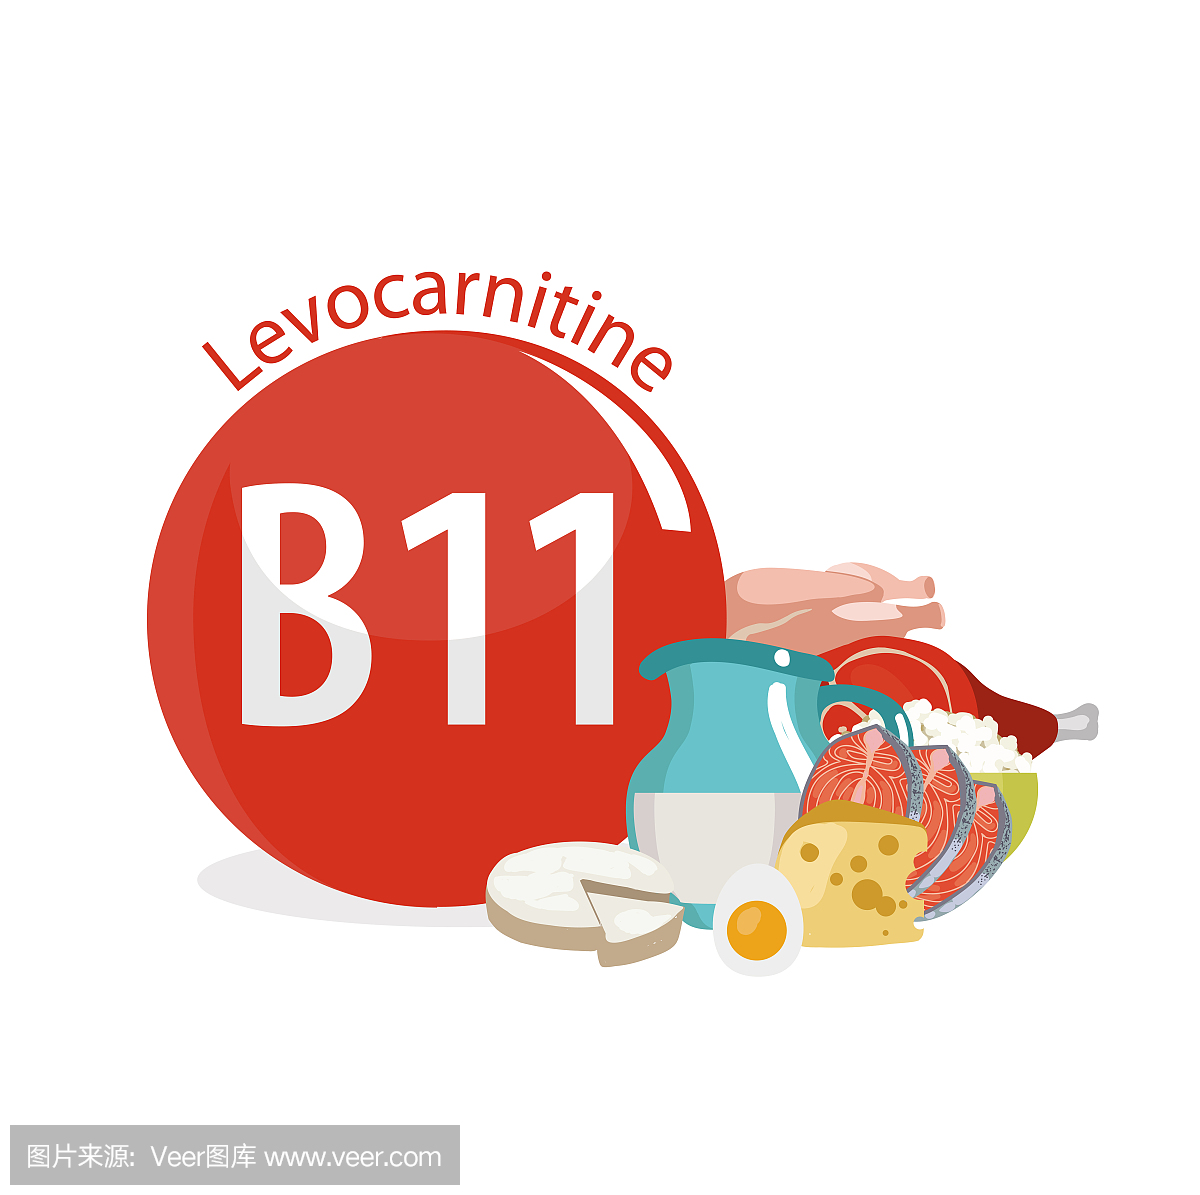 维生素B11(Levocarnitine)。